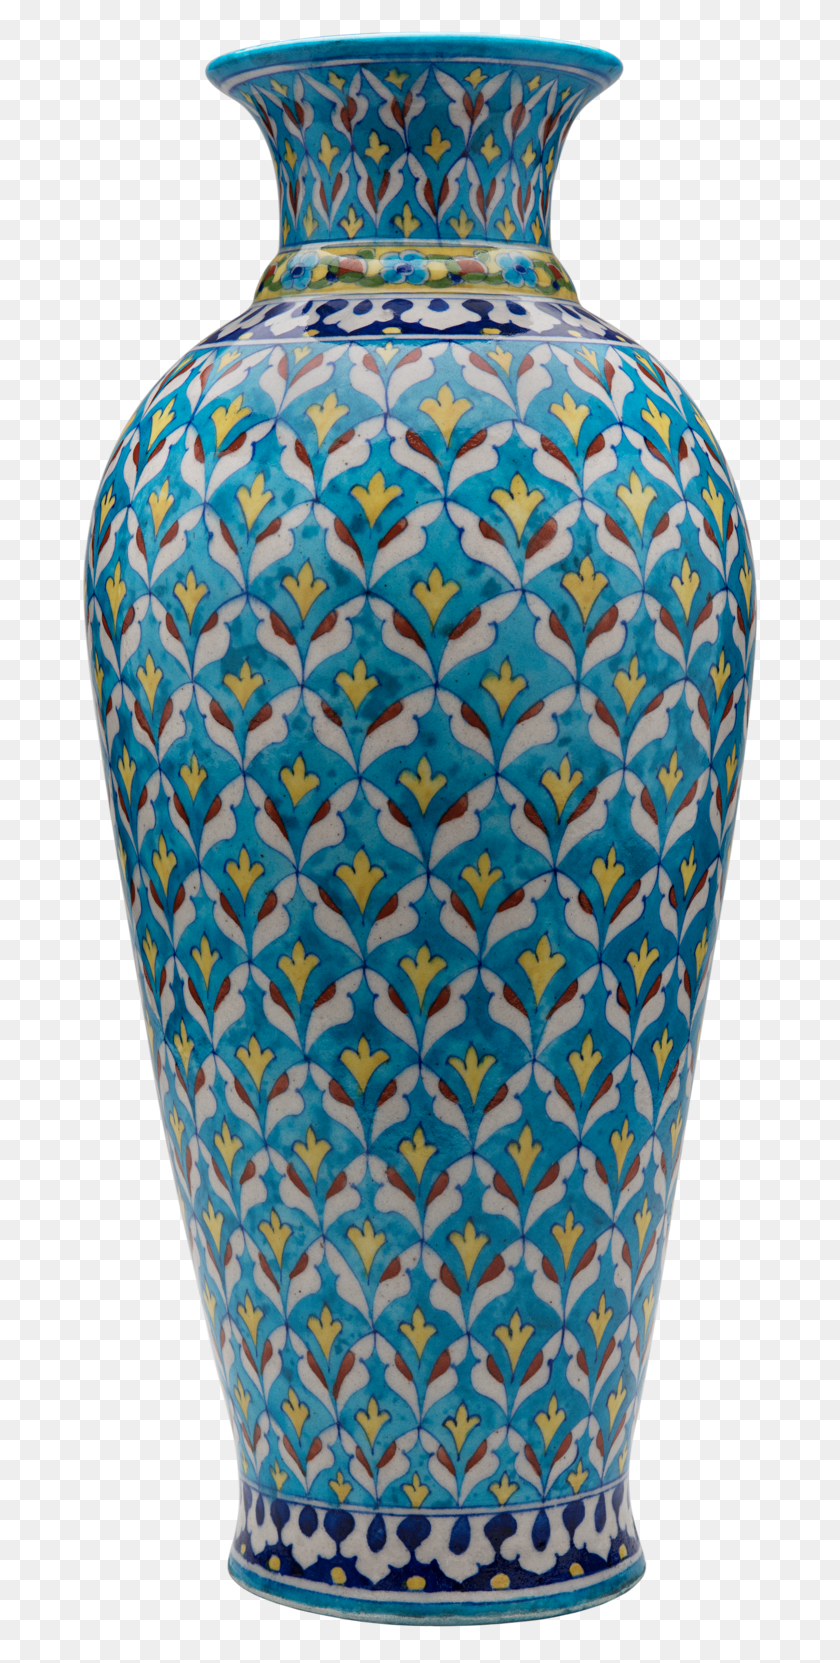 677x1603 Curocarte Синяя Керамика Дизайнерская Ваза Для Цветов Синяя Керамика Керамическая Ваза Онлайн Индия, Фарфор, Банка Hd Png Скачать